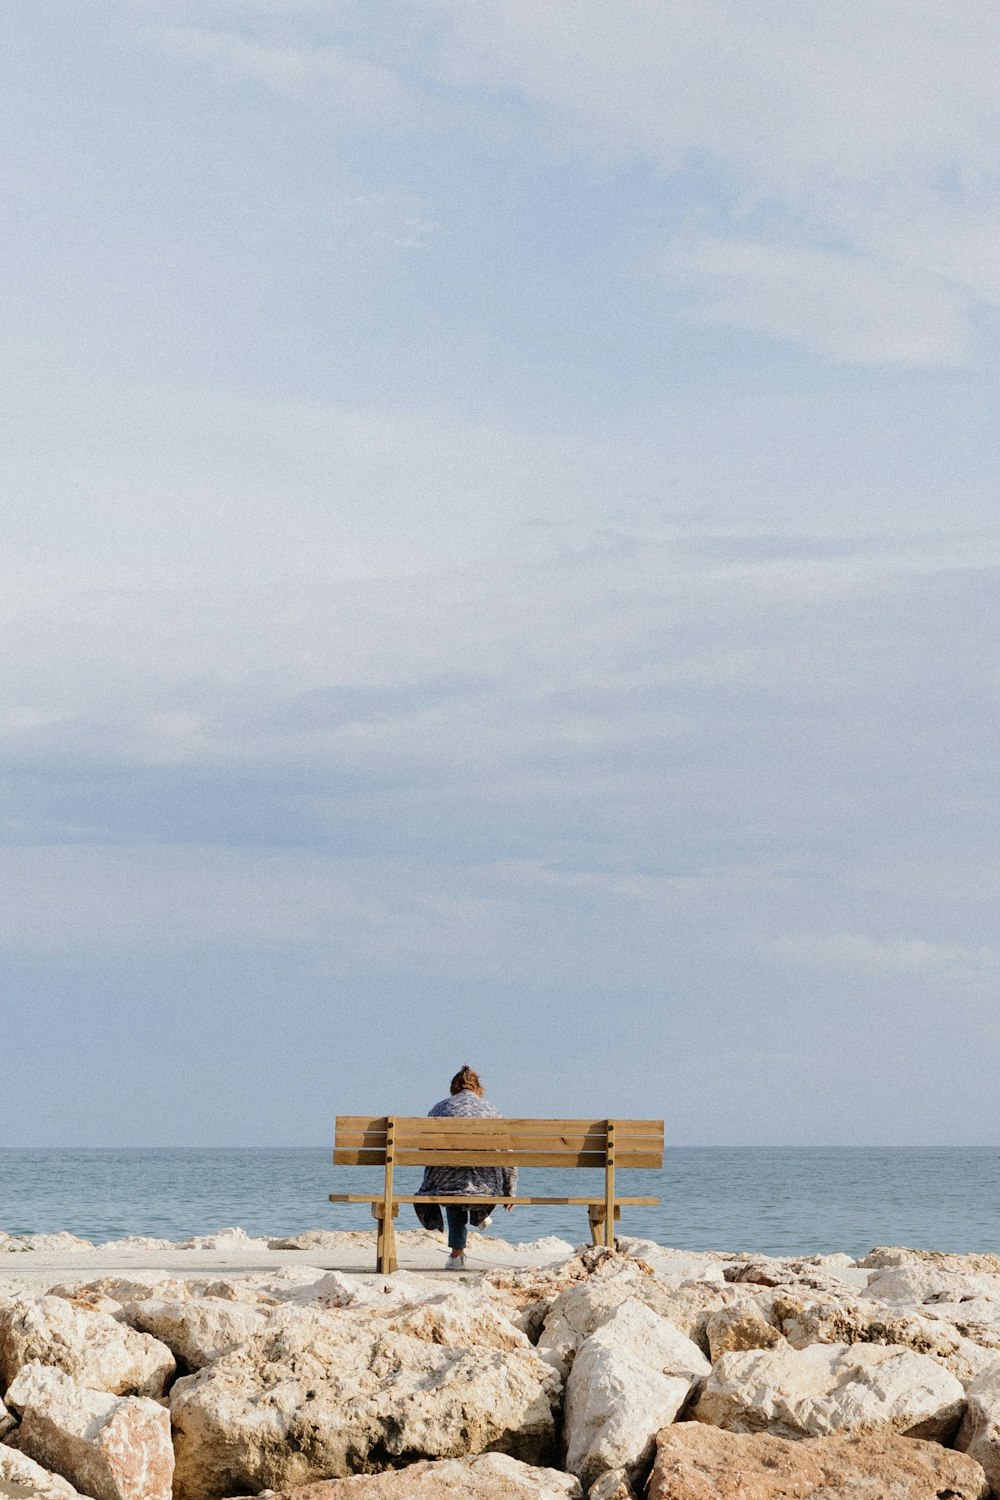 a man sitting on a bench on a rocky beach